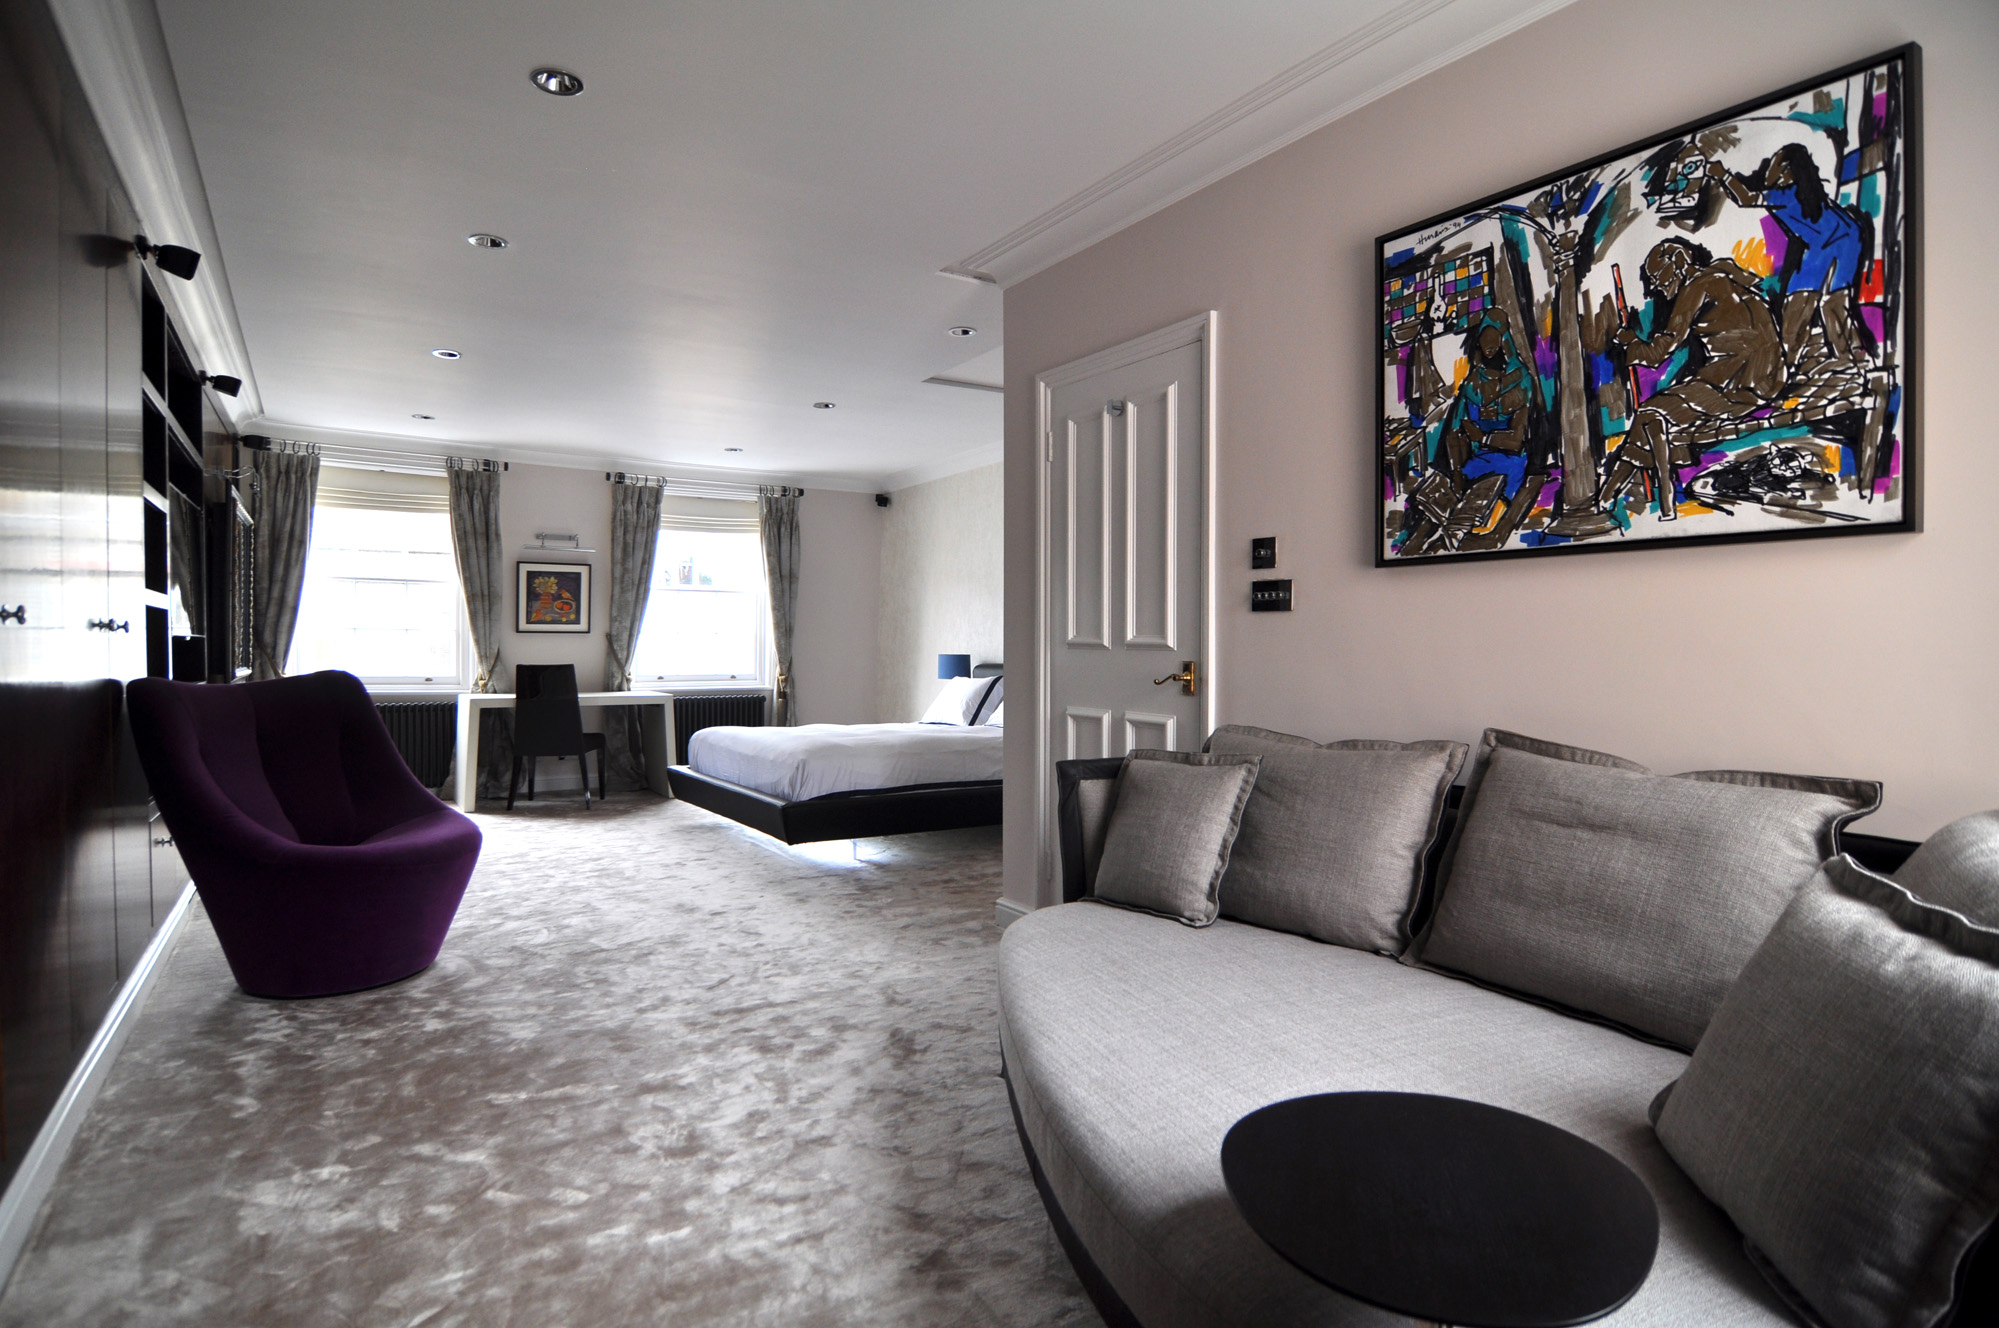 Mayfair interior design - Luxury Bedroom featuring bespoke lighting and MF Husain artwork